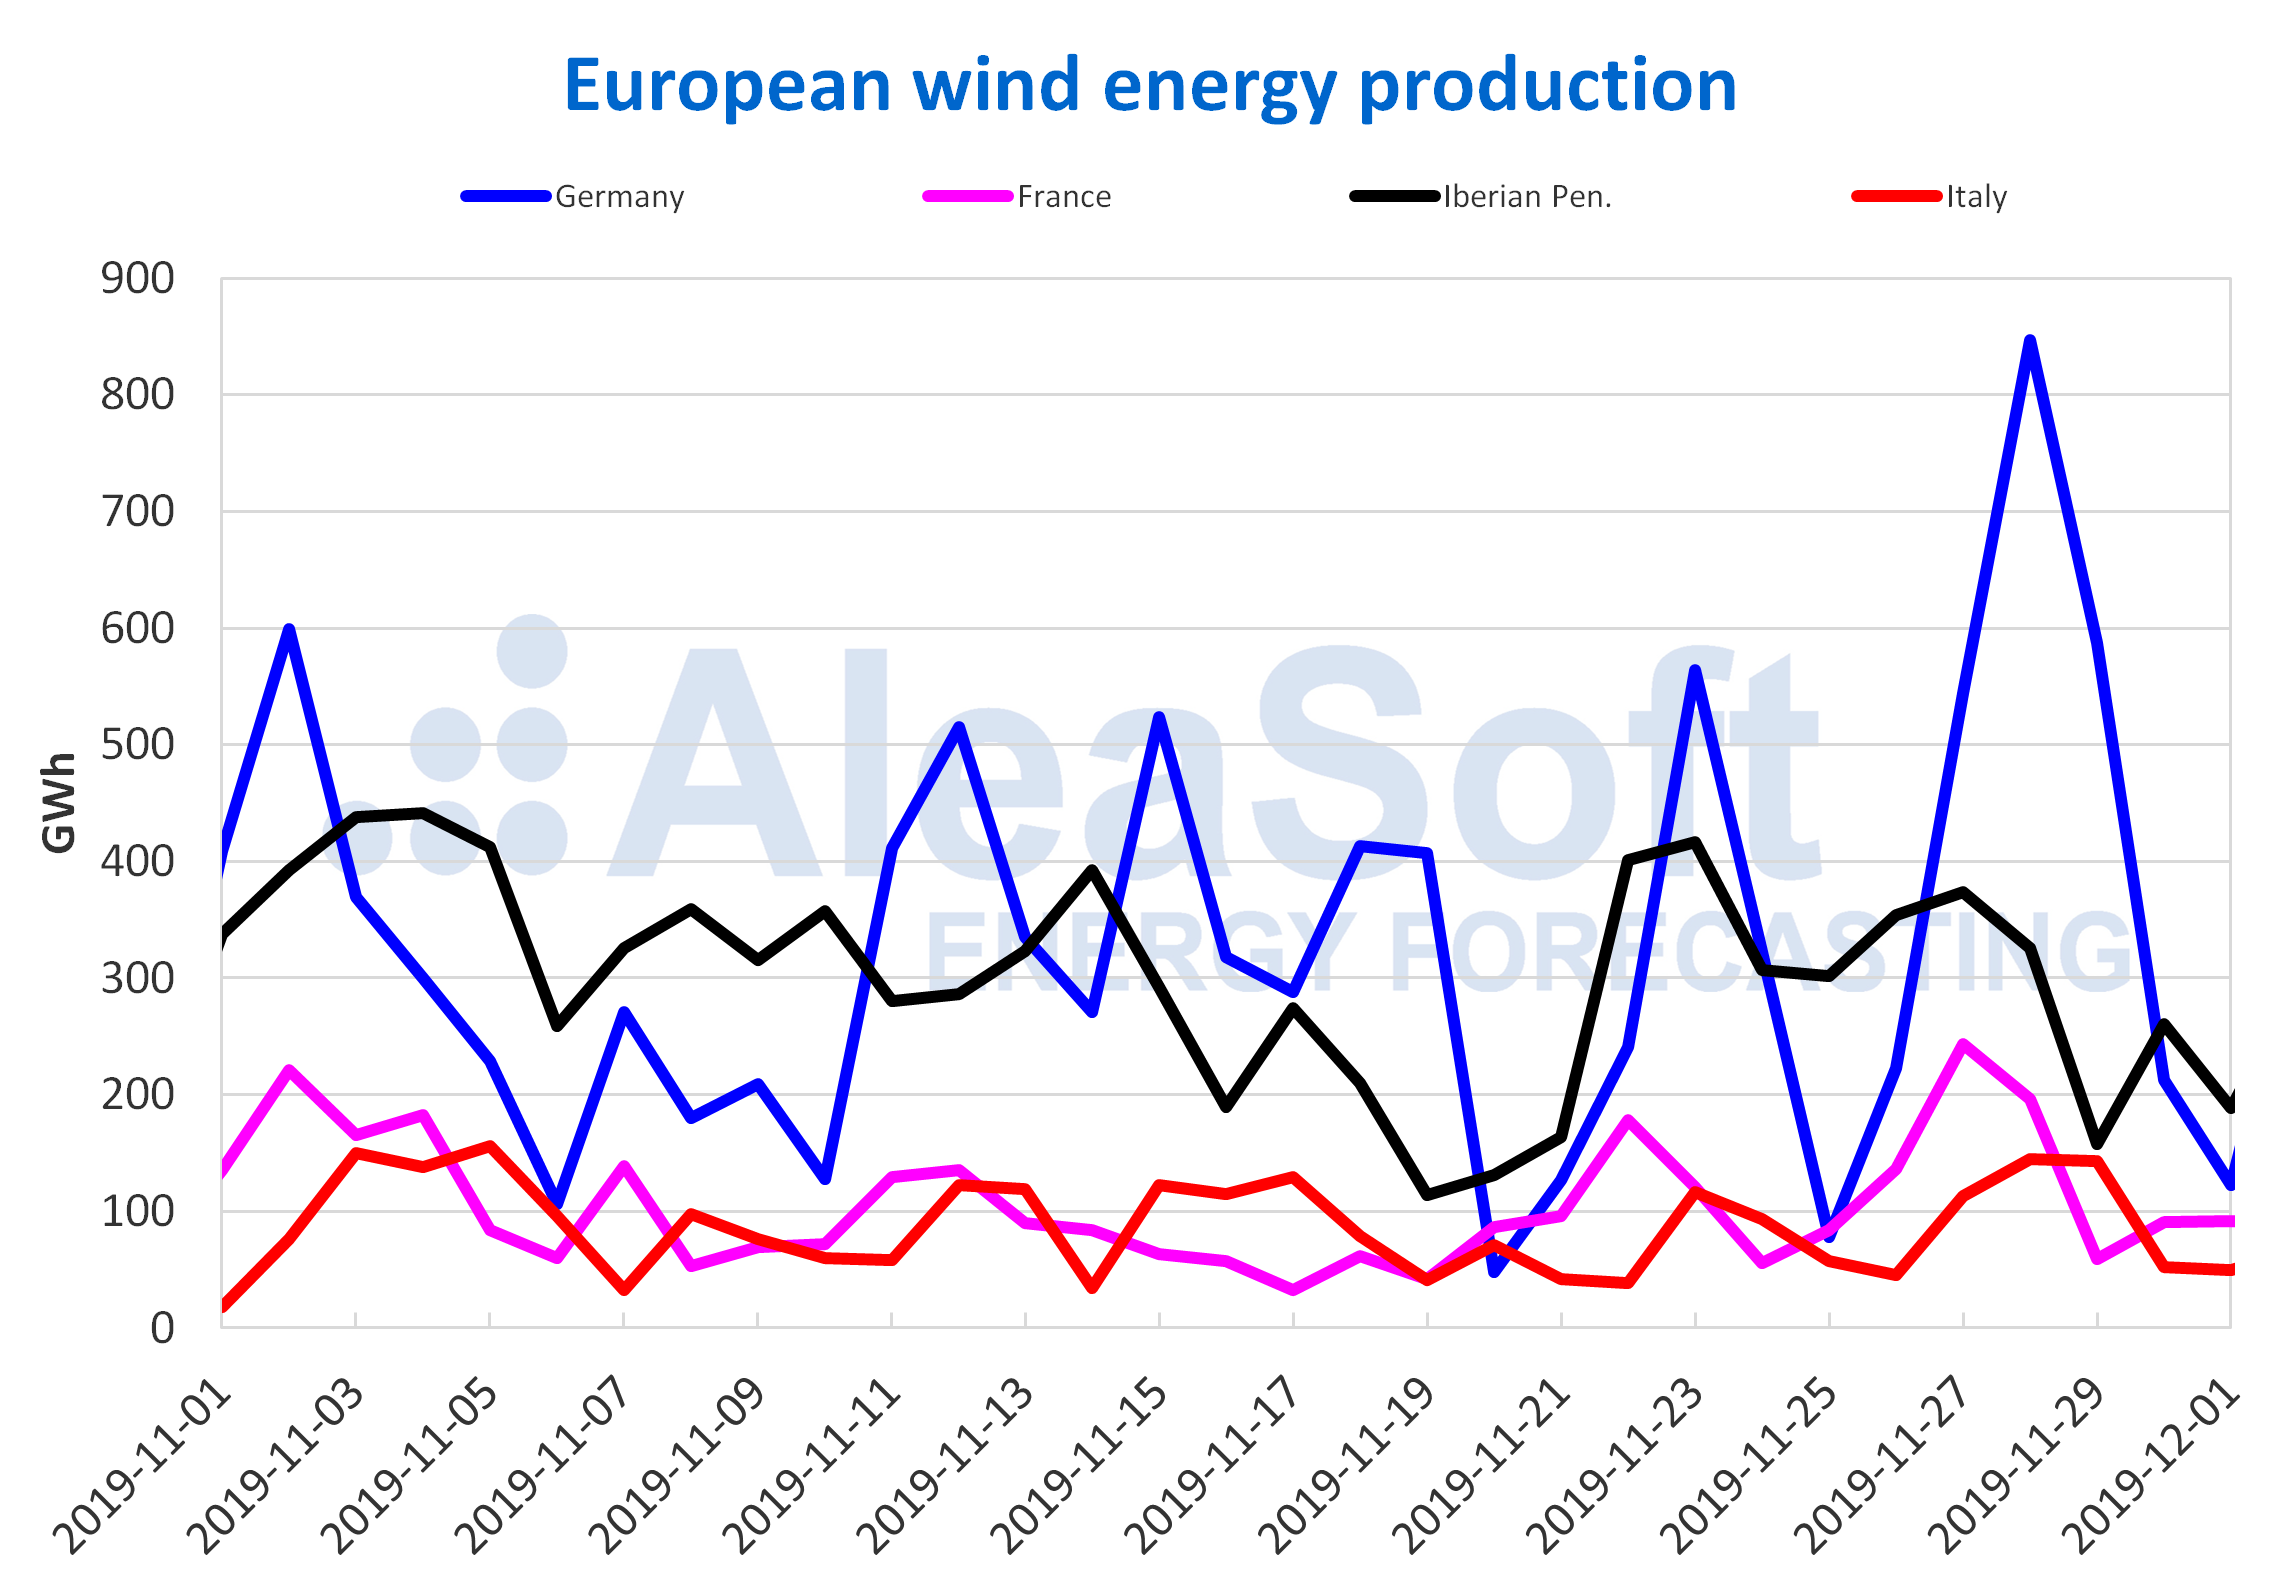 AleaSoft - European wind energy production